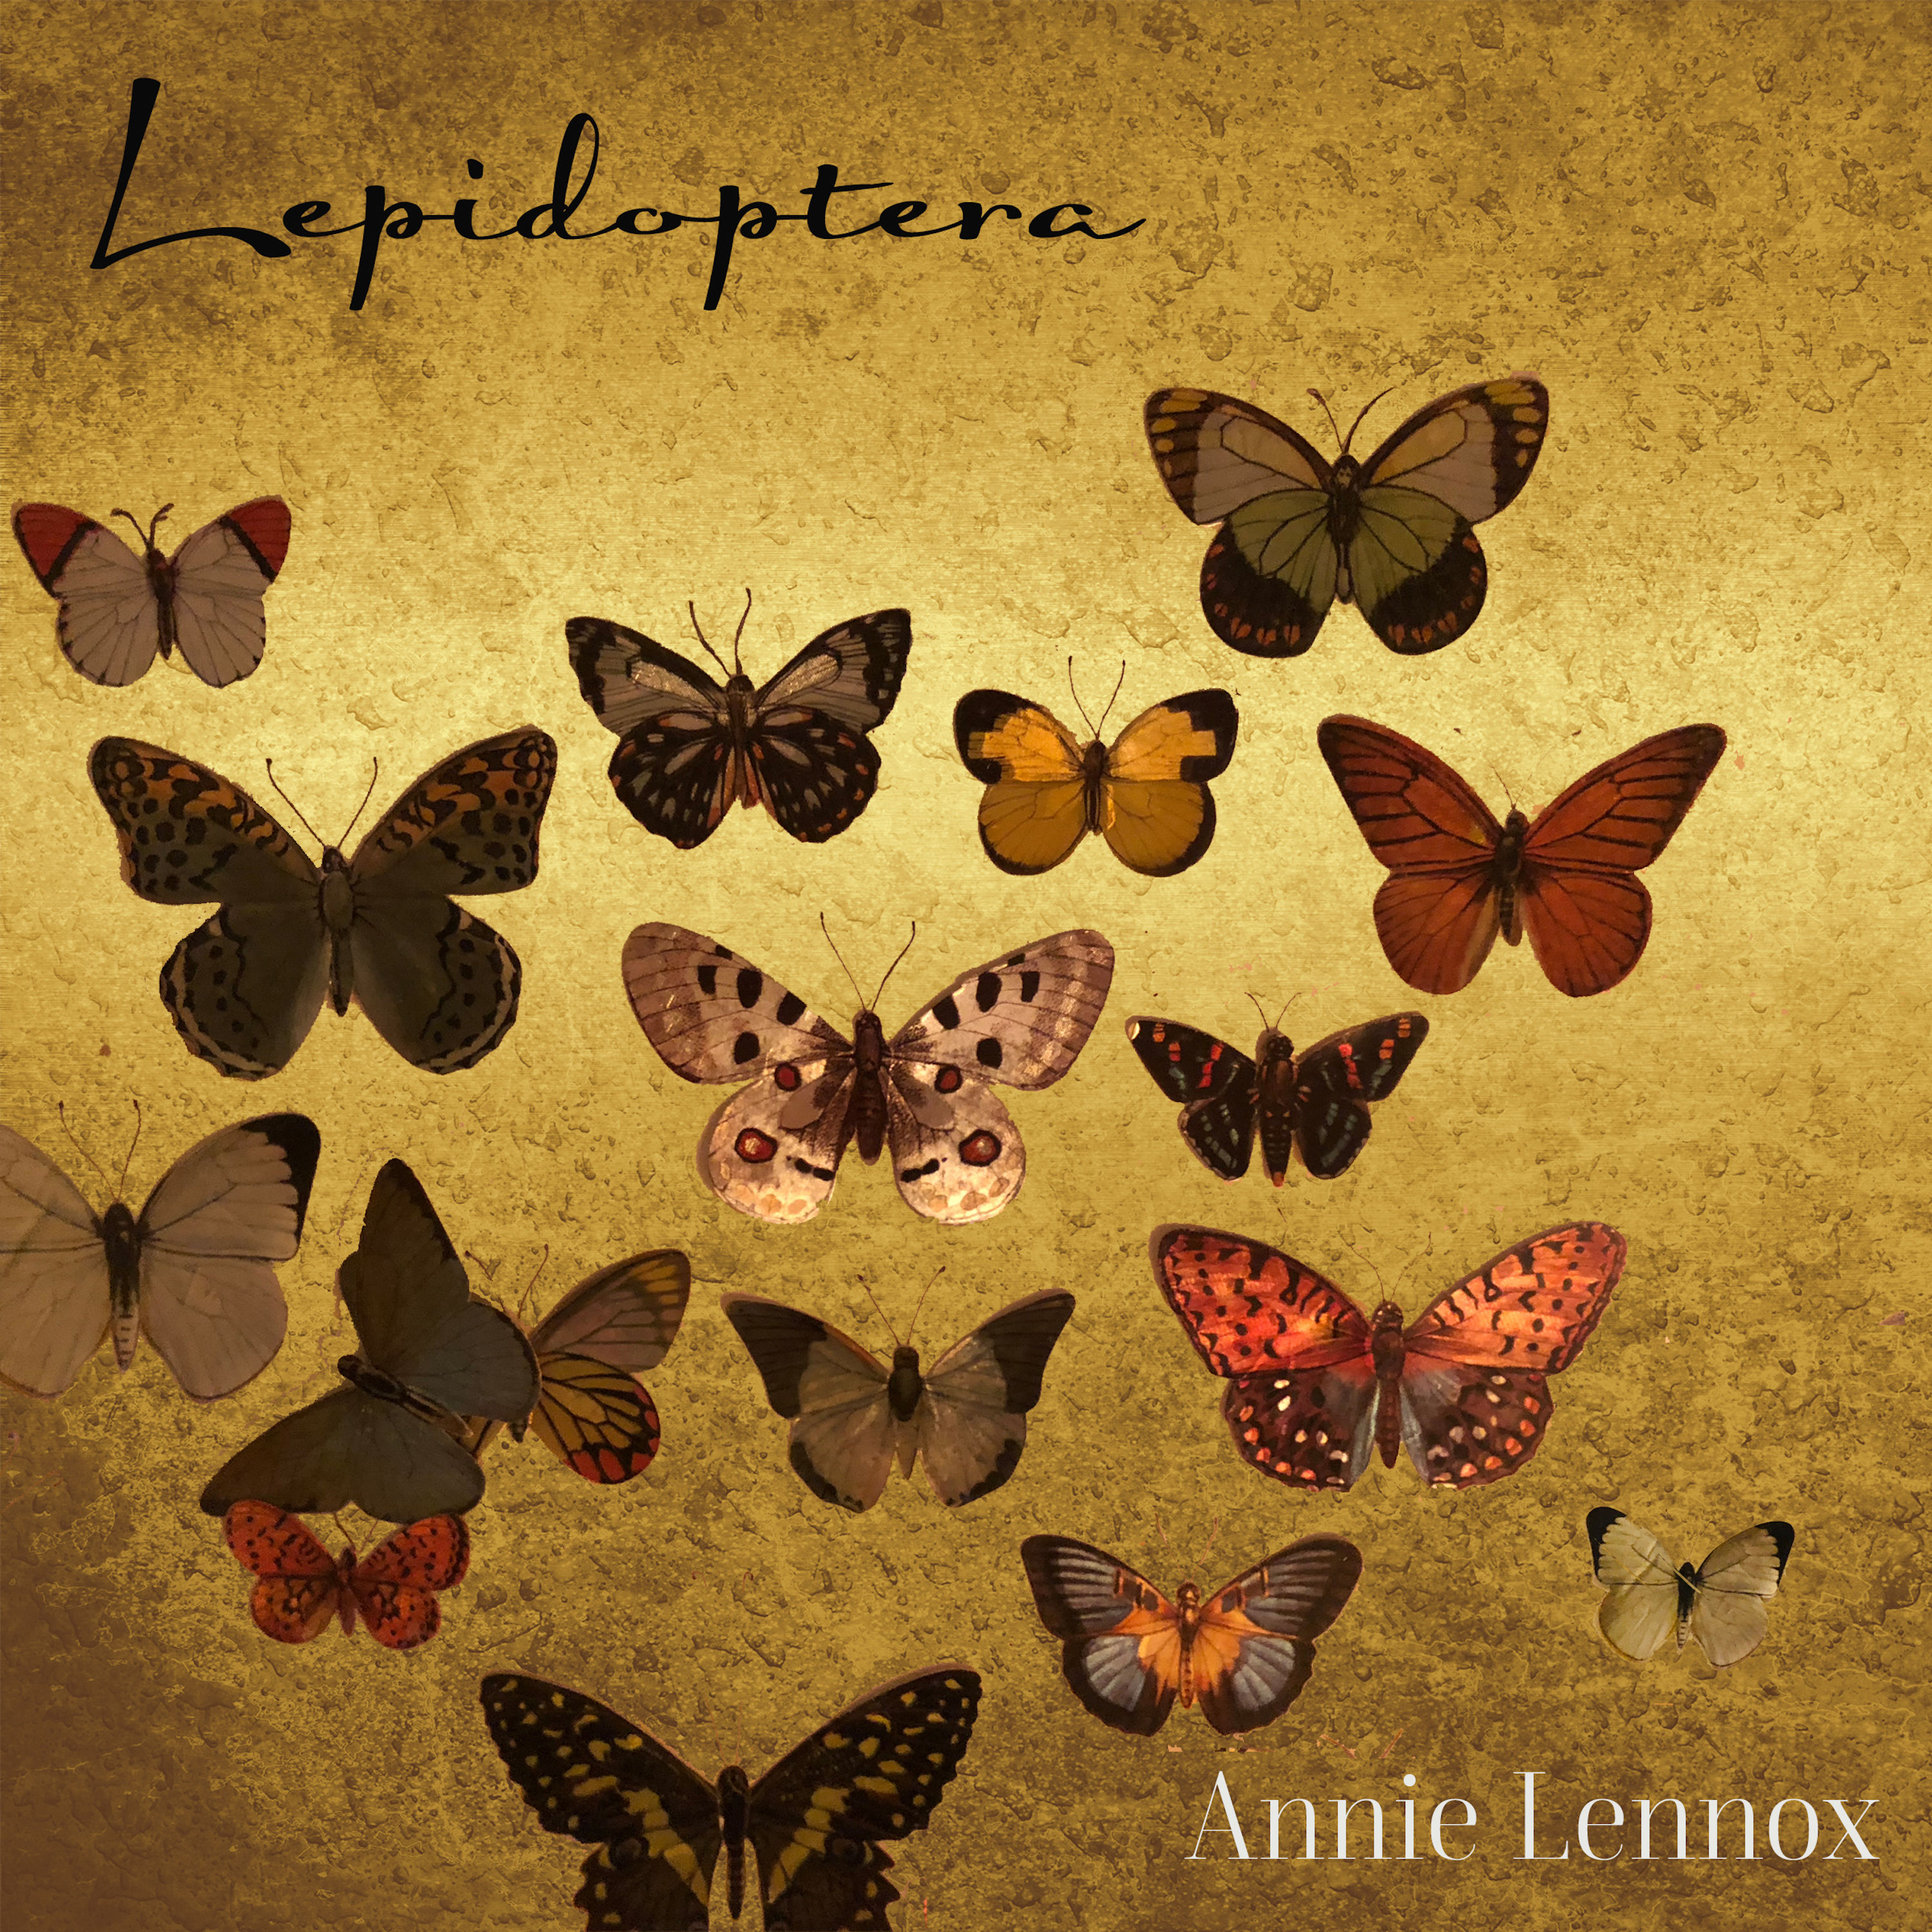 Annie Lennox – Lepidoptera (2019) [FLAC 24bit/48kHz]